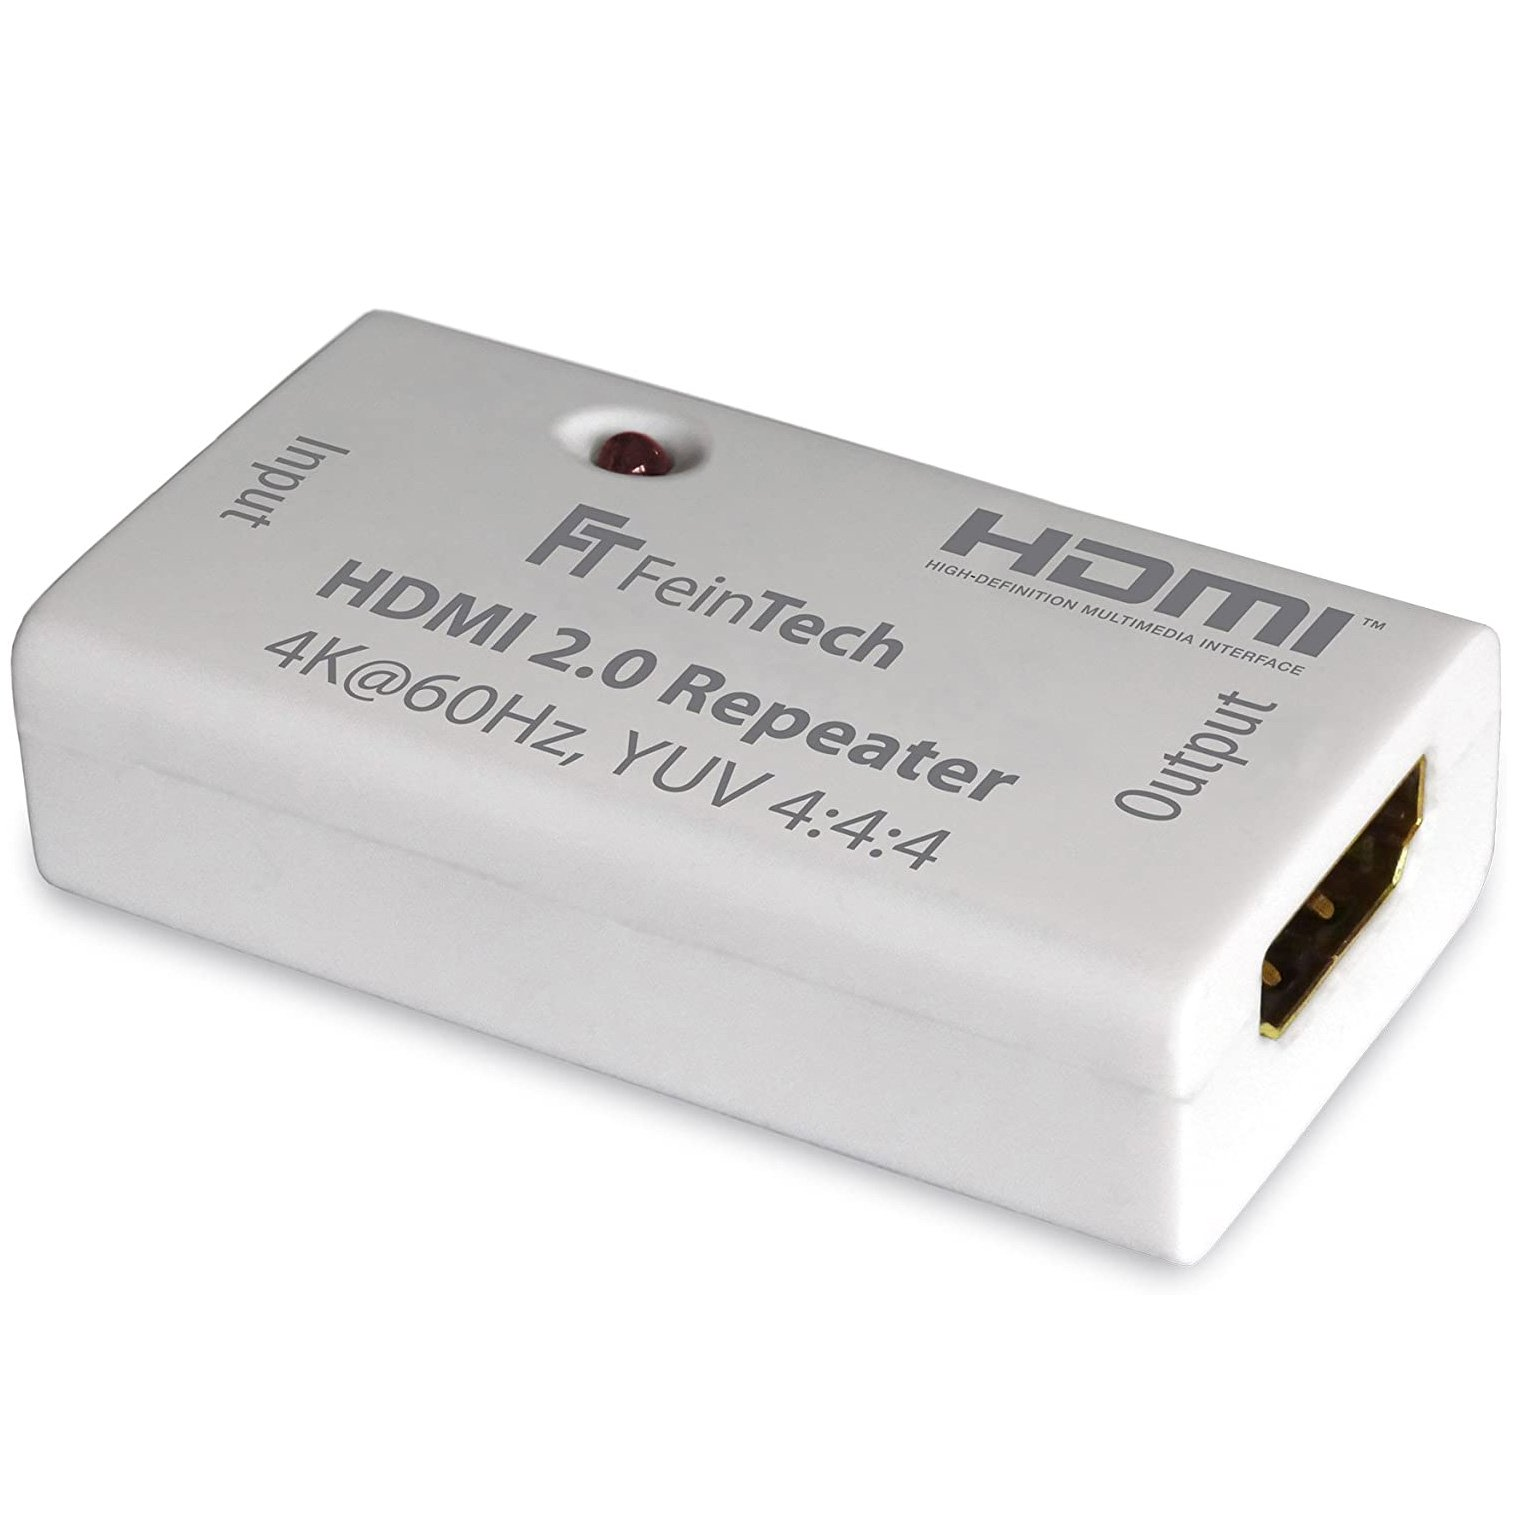 FEINTECH VMR00100 HDMI 2.0 Repeater 60Hz, Repeater 4K HDMI